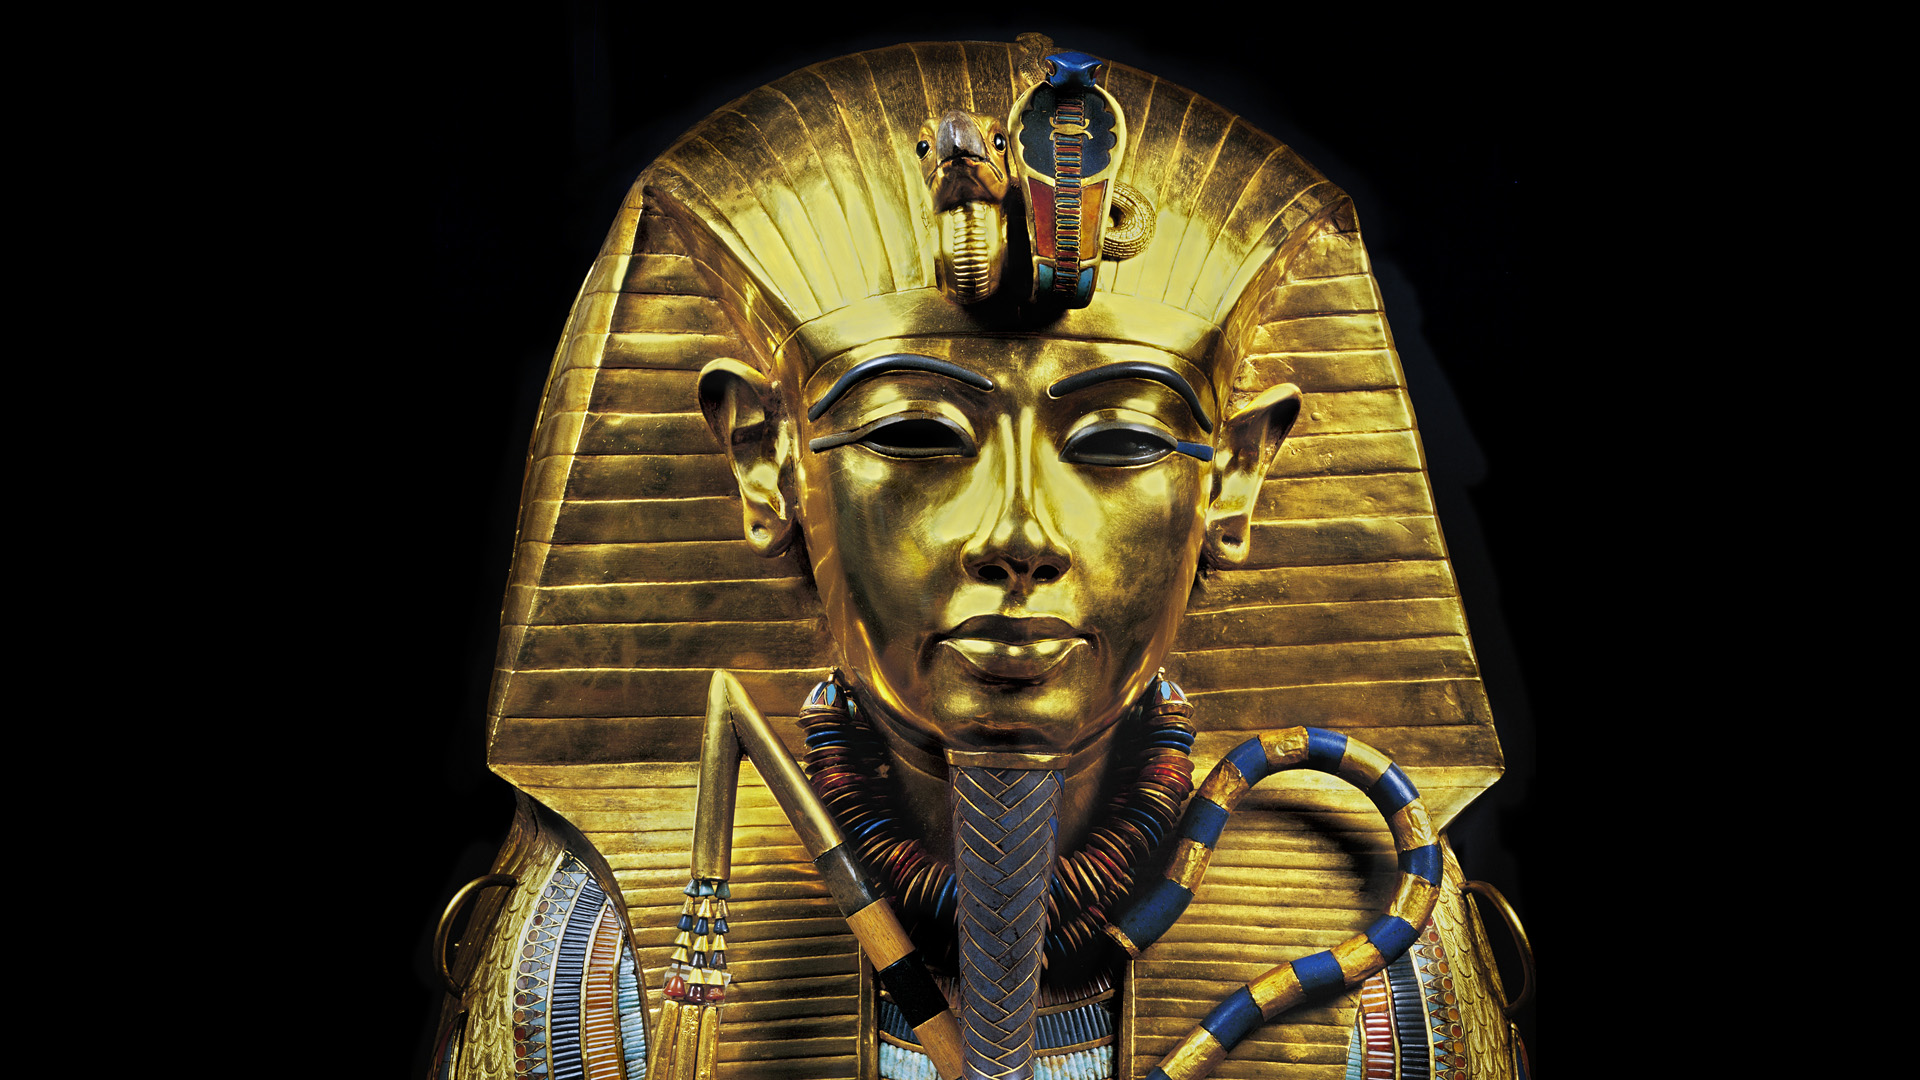 Golden Pharaoh Backgrounds on Wallpapers Vista